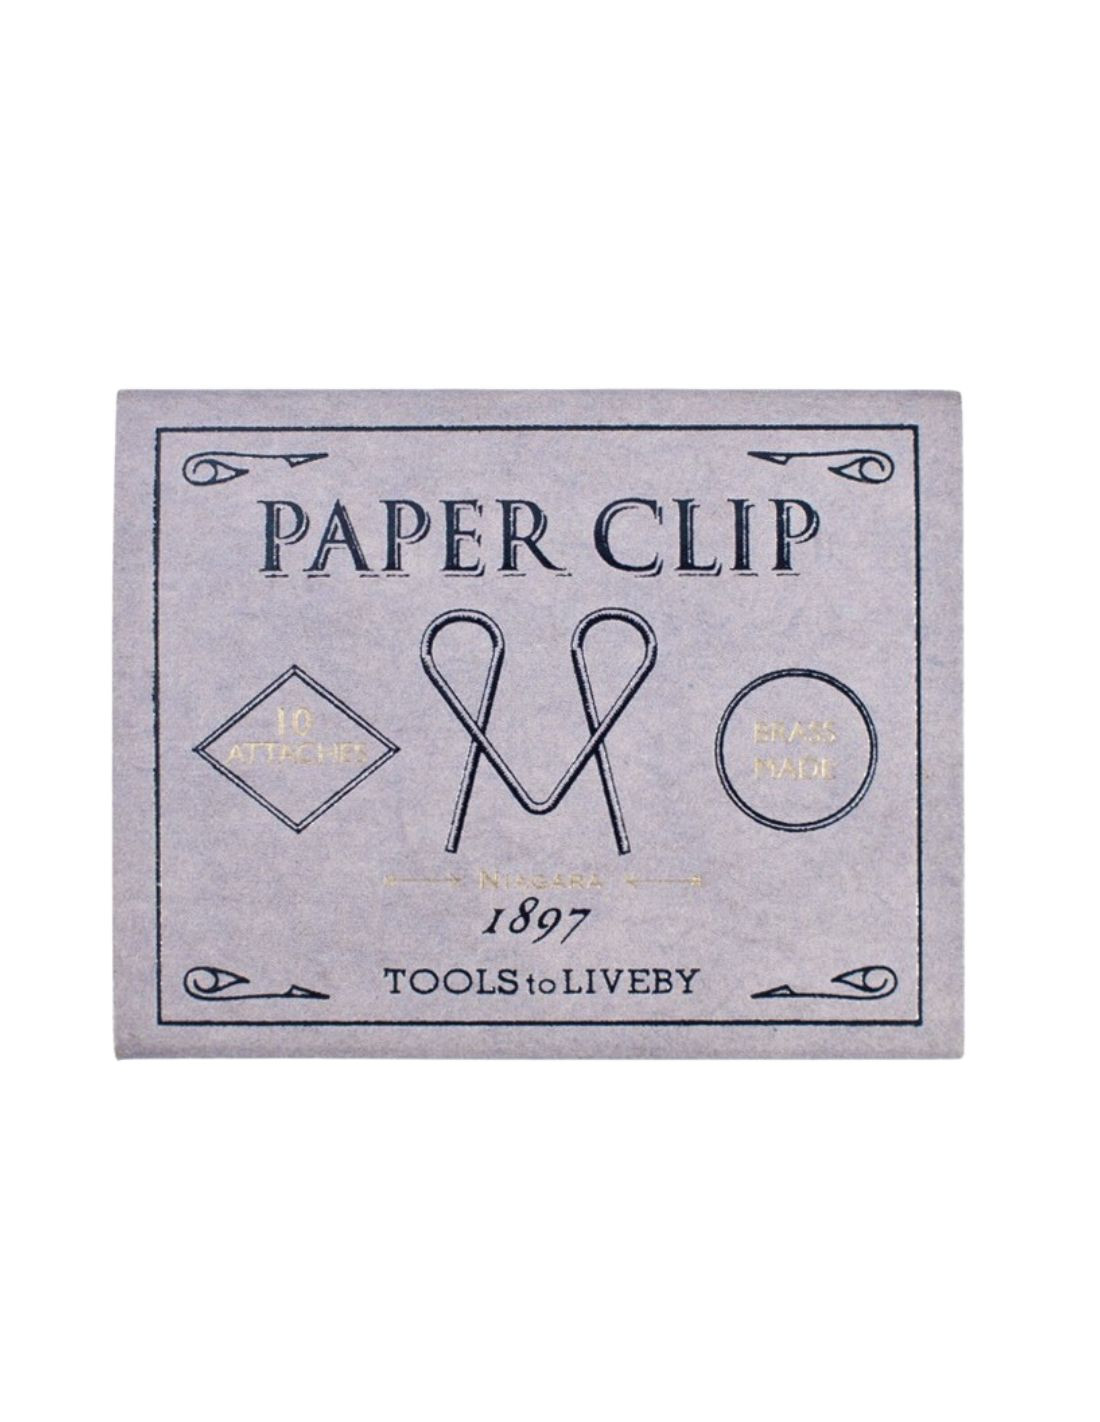 Brass Paper Clips - Niagara - 10 pieces - Tools To Liveby